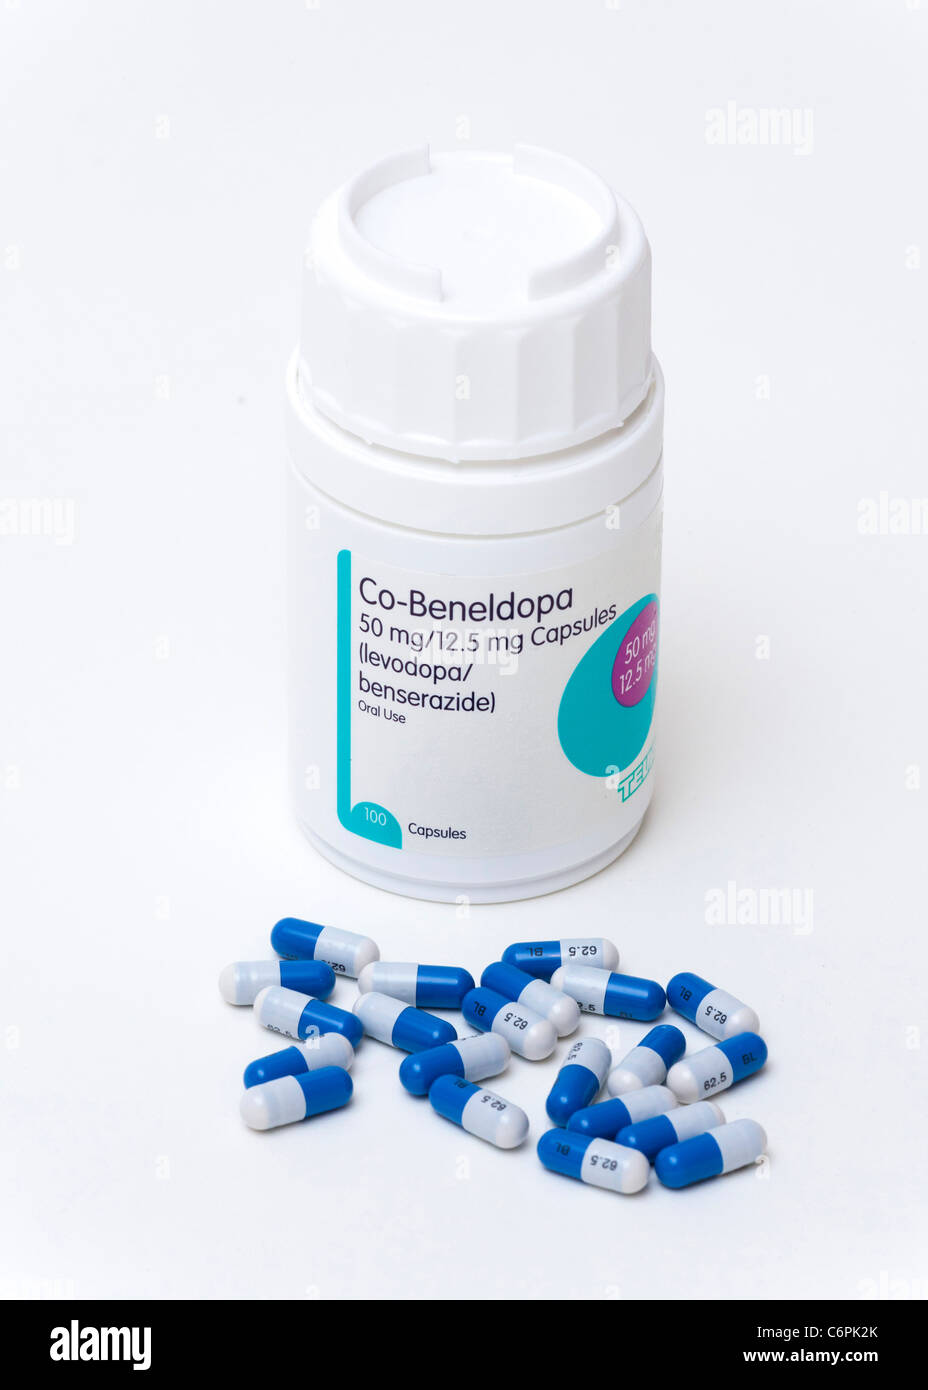 Co-Beneldopa (Levodopa / Benserazide) capsules for treating Parkinson's disease Stock Photo